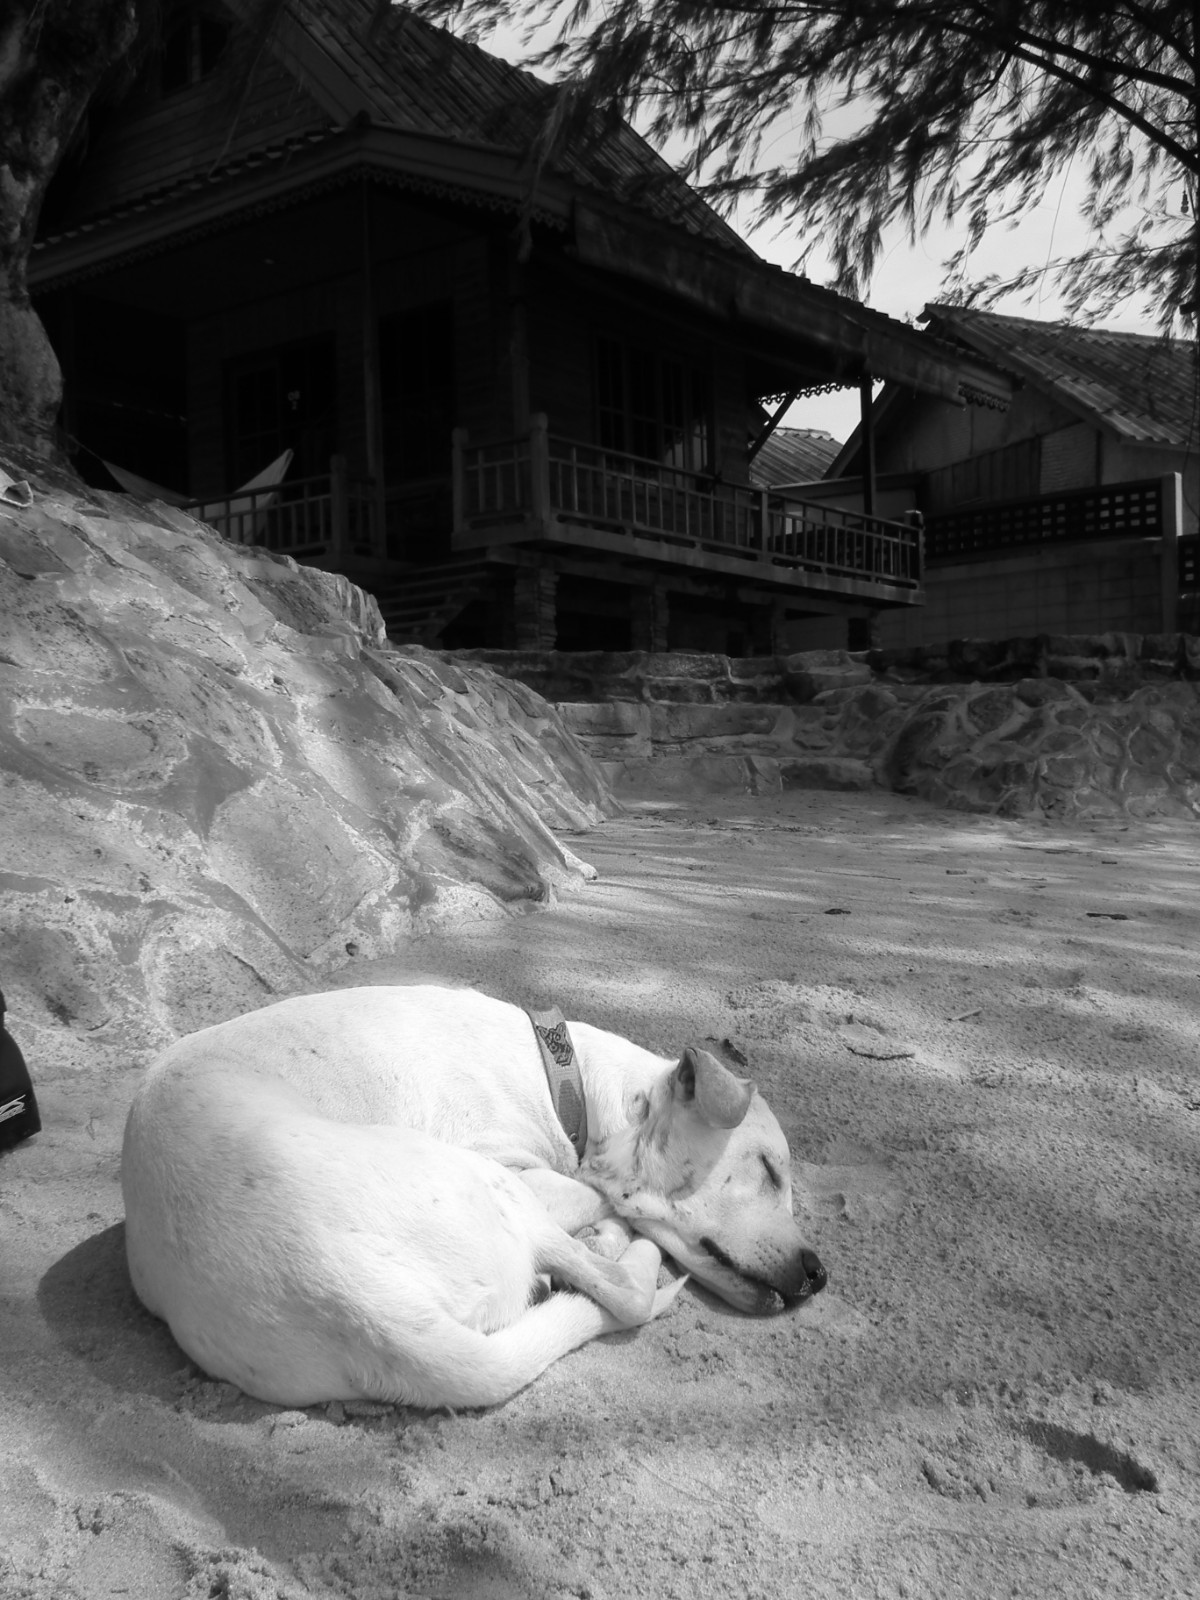 Sleeping dog, Animal | Dog | Sleep | Sleeping | Sand | Beach | Shade | Shadow | Black and White | Fur | Furry